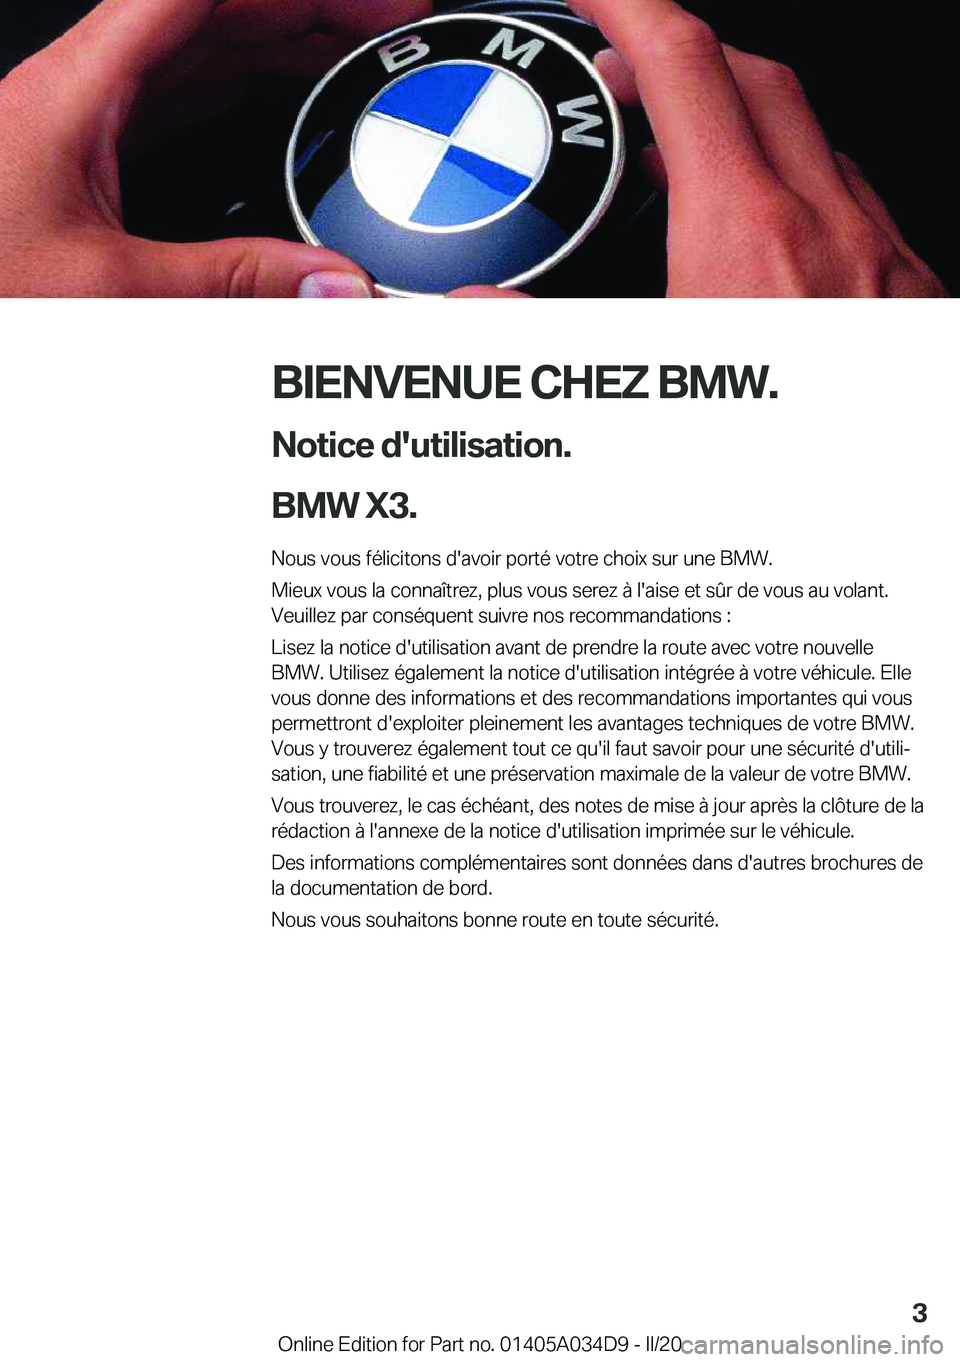 BMW X3 2020  Notices Demploi (in French) �B�I�E�N�V�E�N�U�E��C�H�E�Z��B�M�W�.�N�o�t�i�c�e��d�'�u�t�i�l�i�s�a�t�i�o�n�.
�B�M�W��X�3�. �N�o�u�s��v�o�u�s��f�é�l�i�c�i�t�o�n�s��d�'�a�v�o�i�r��p�o�r�t�é��v�o�t�r�e��c�h�o�i�x�